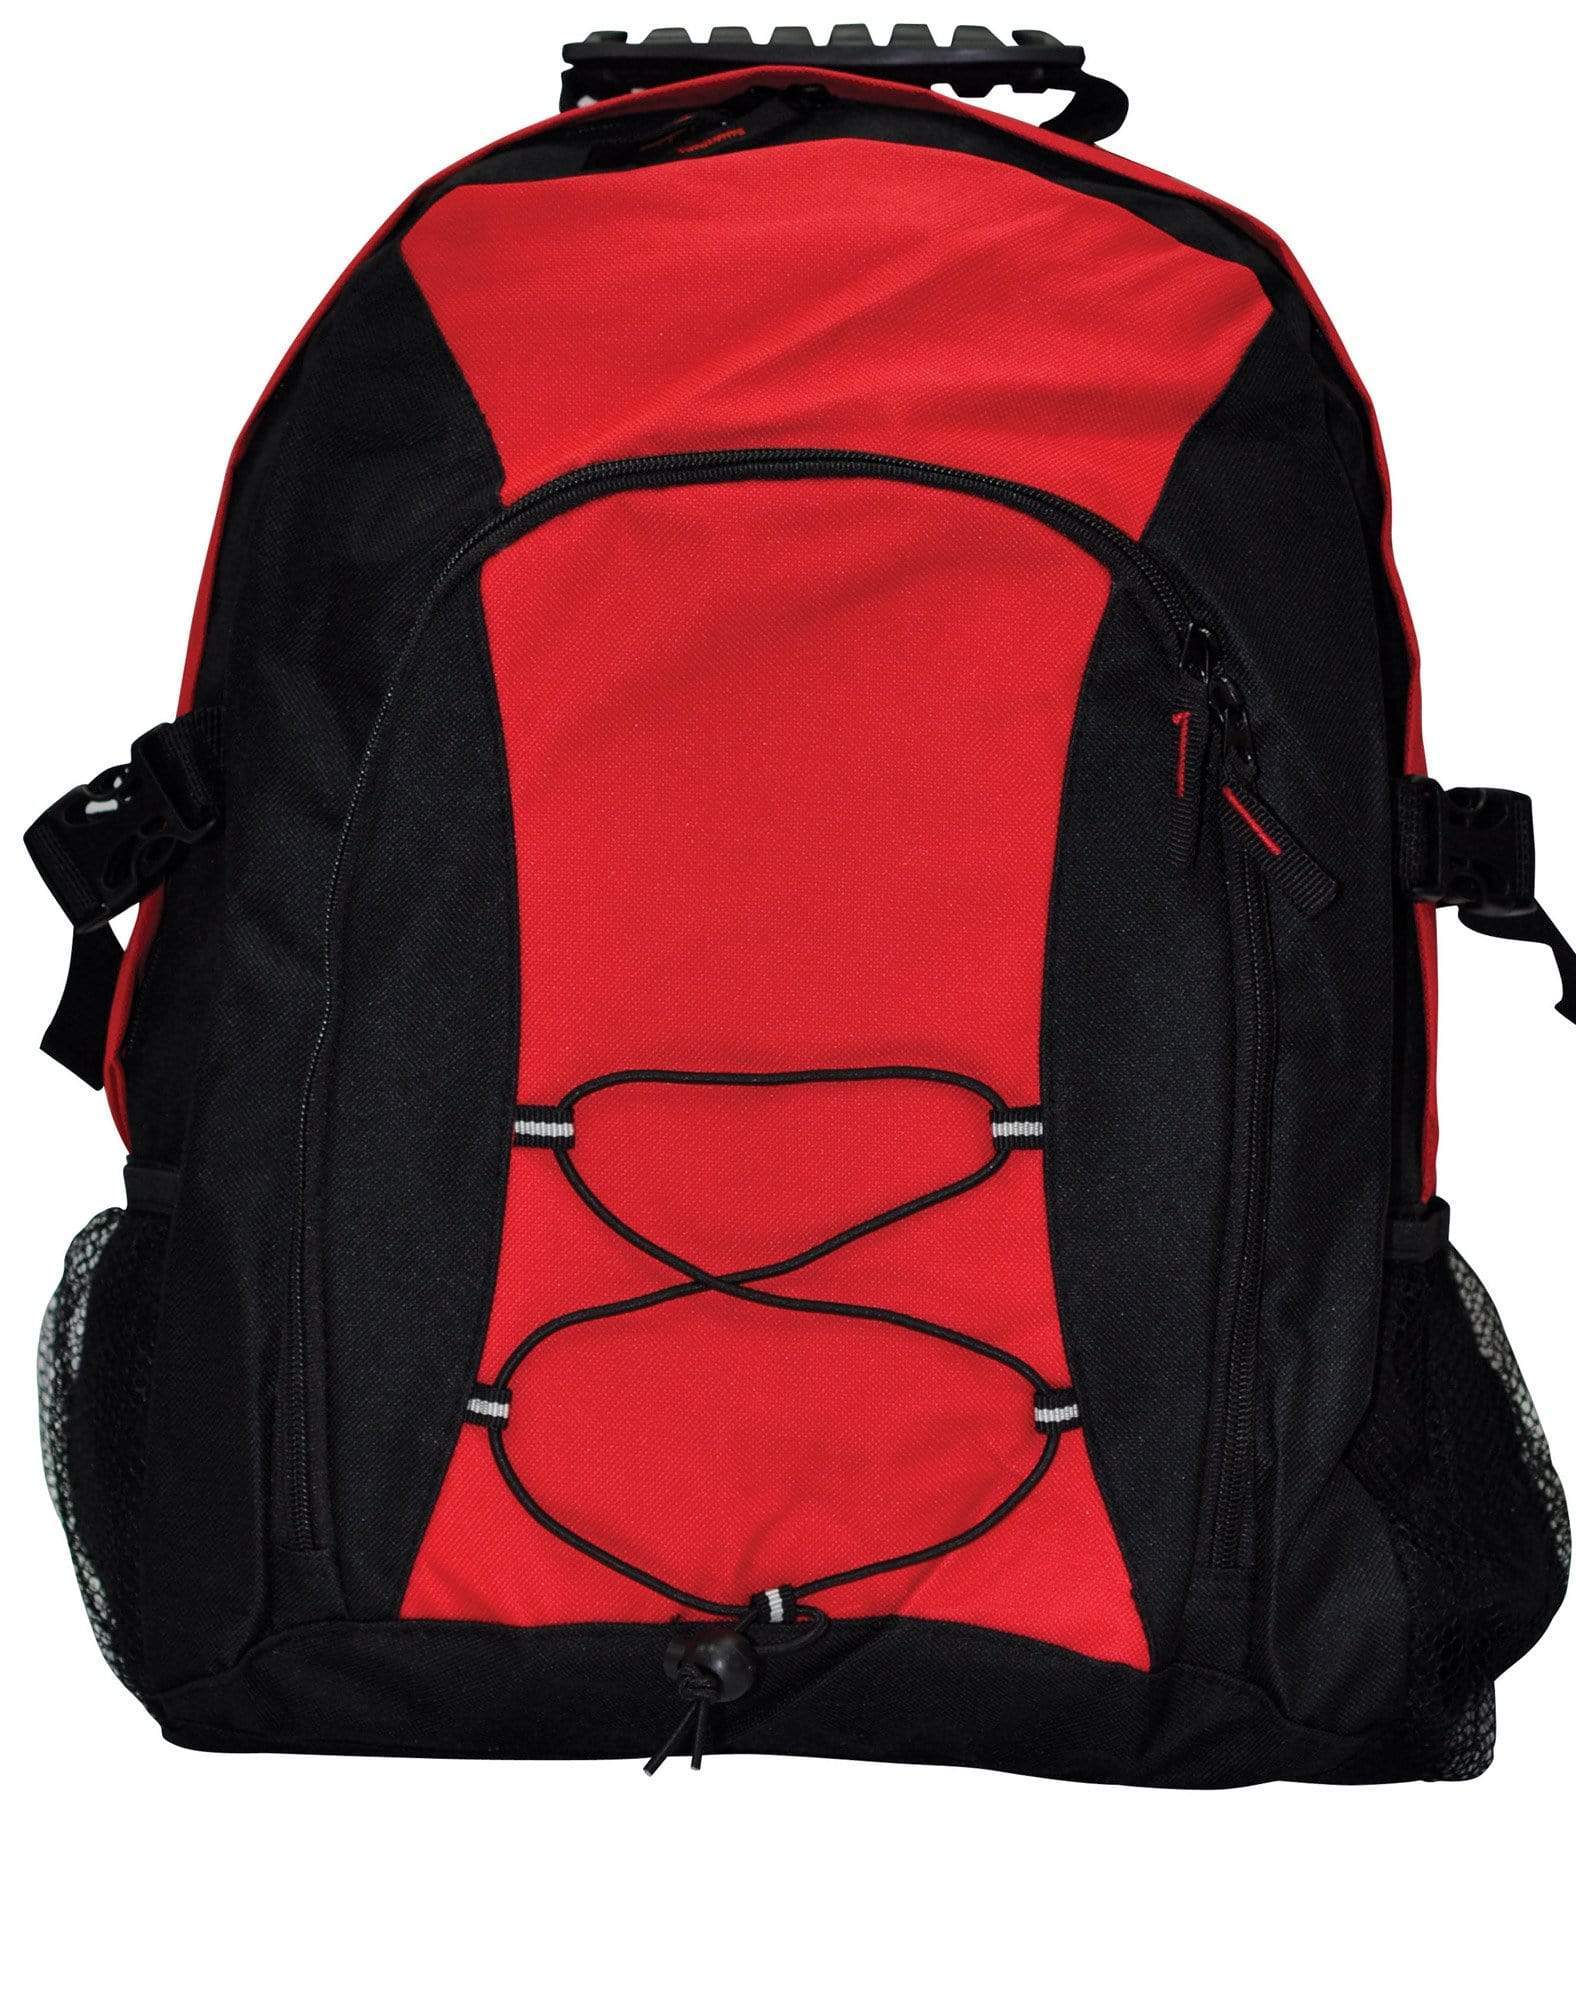 Smartpack Backpack B5002 Active Wear Winning Spirit Black/Red "(w)39.5cm x (h)43cm x (d)19cm, Capacity: 23 Litres" 